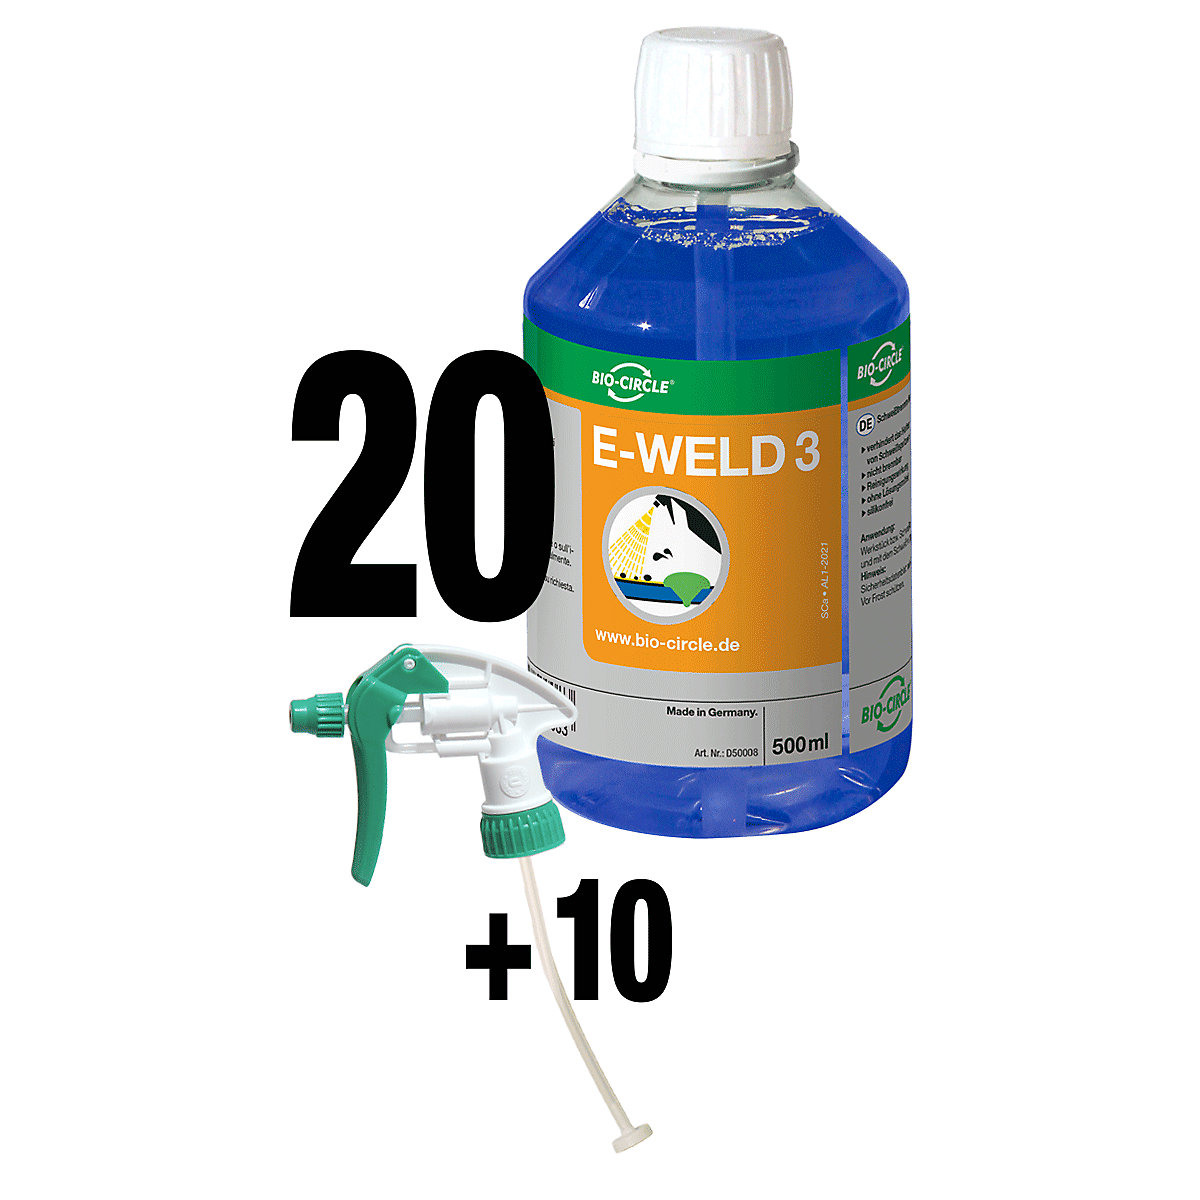 E-WELD 3 welding protection spray – Bio-Circle